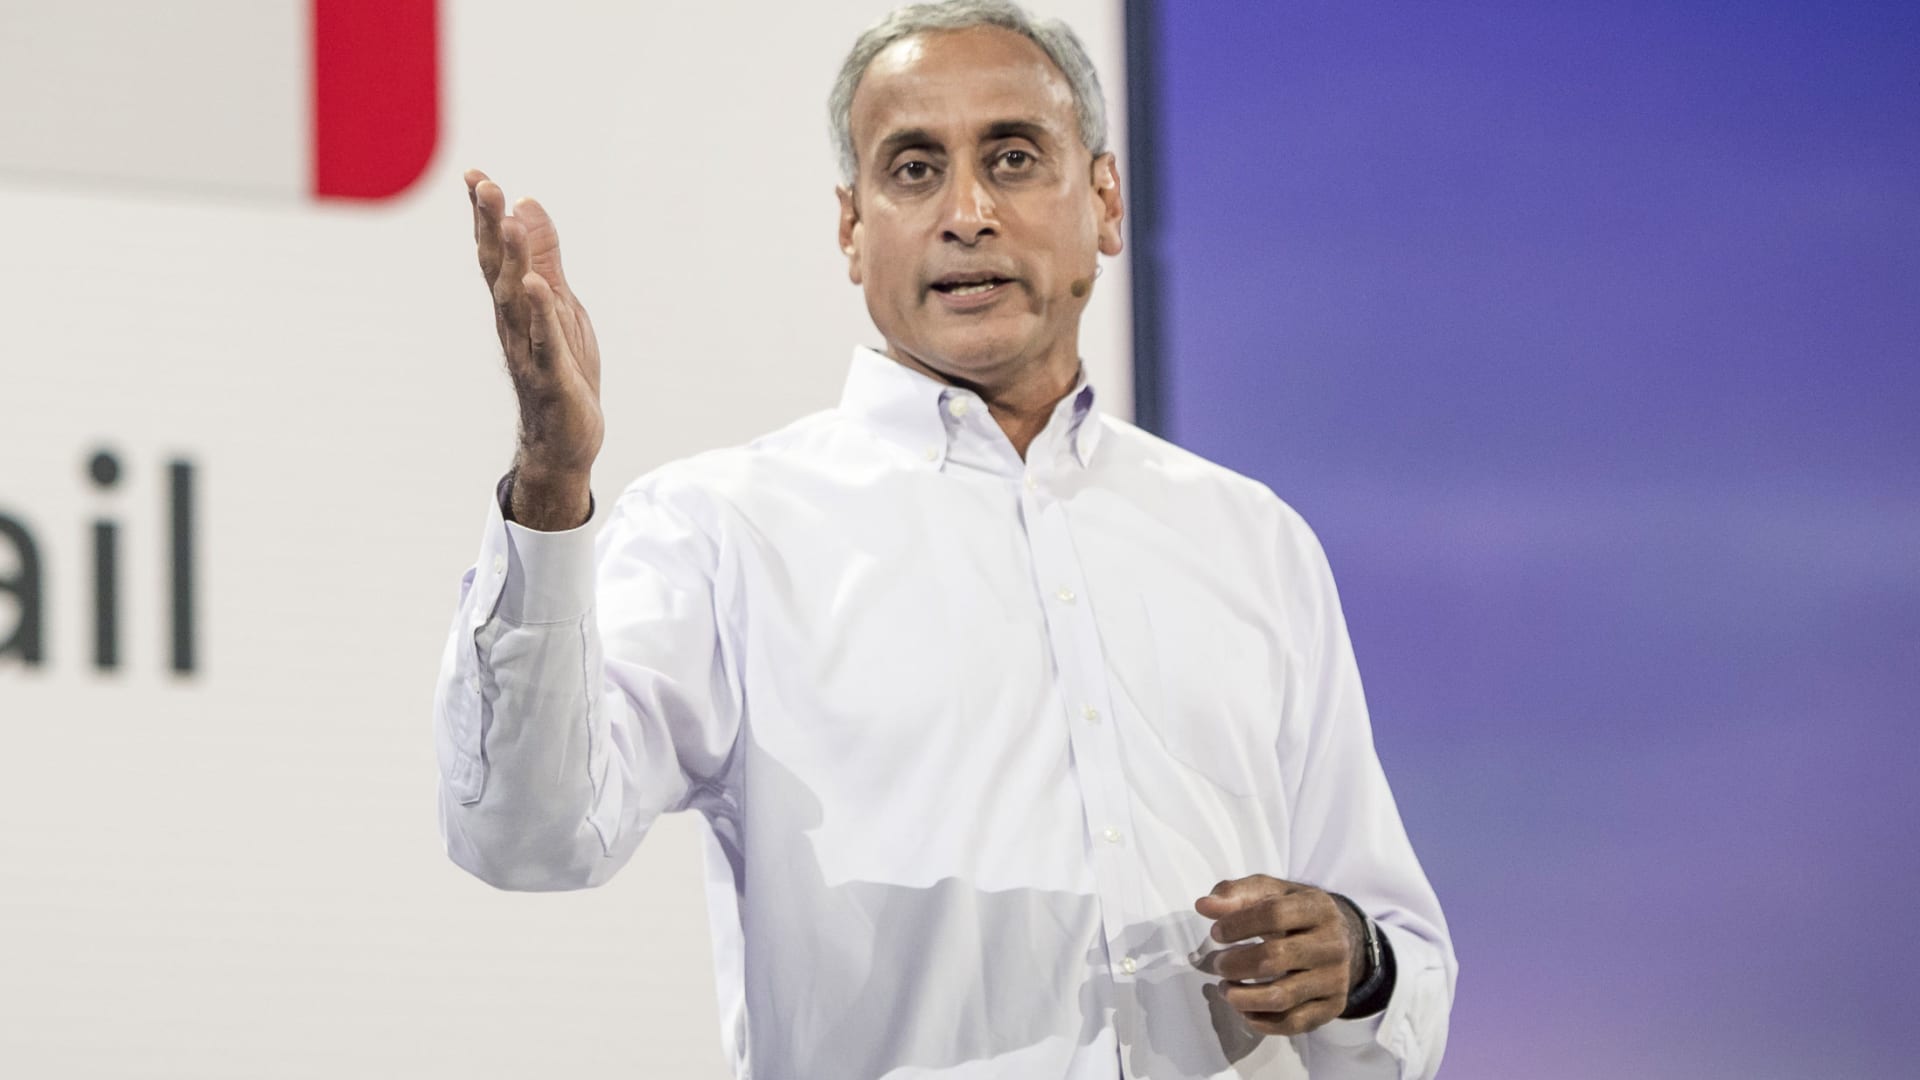 Google search chief Raghavan warns employees of 'new operational realities'